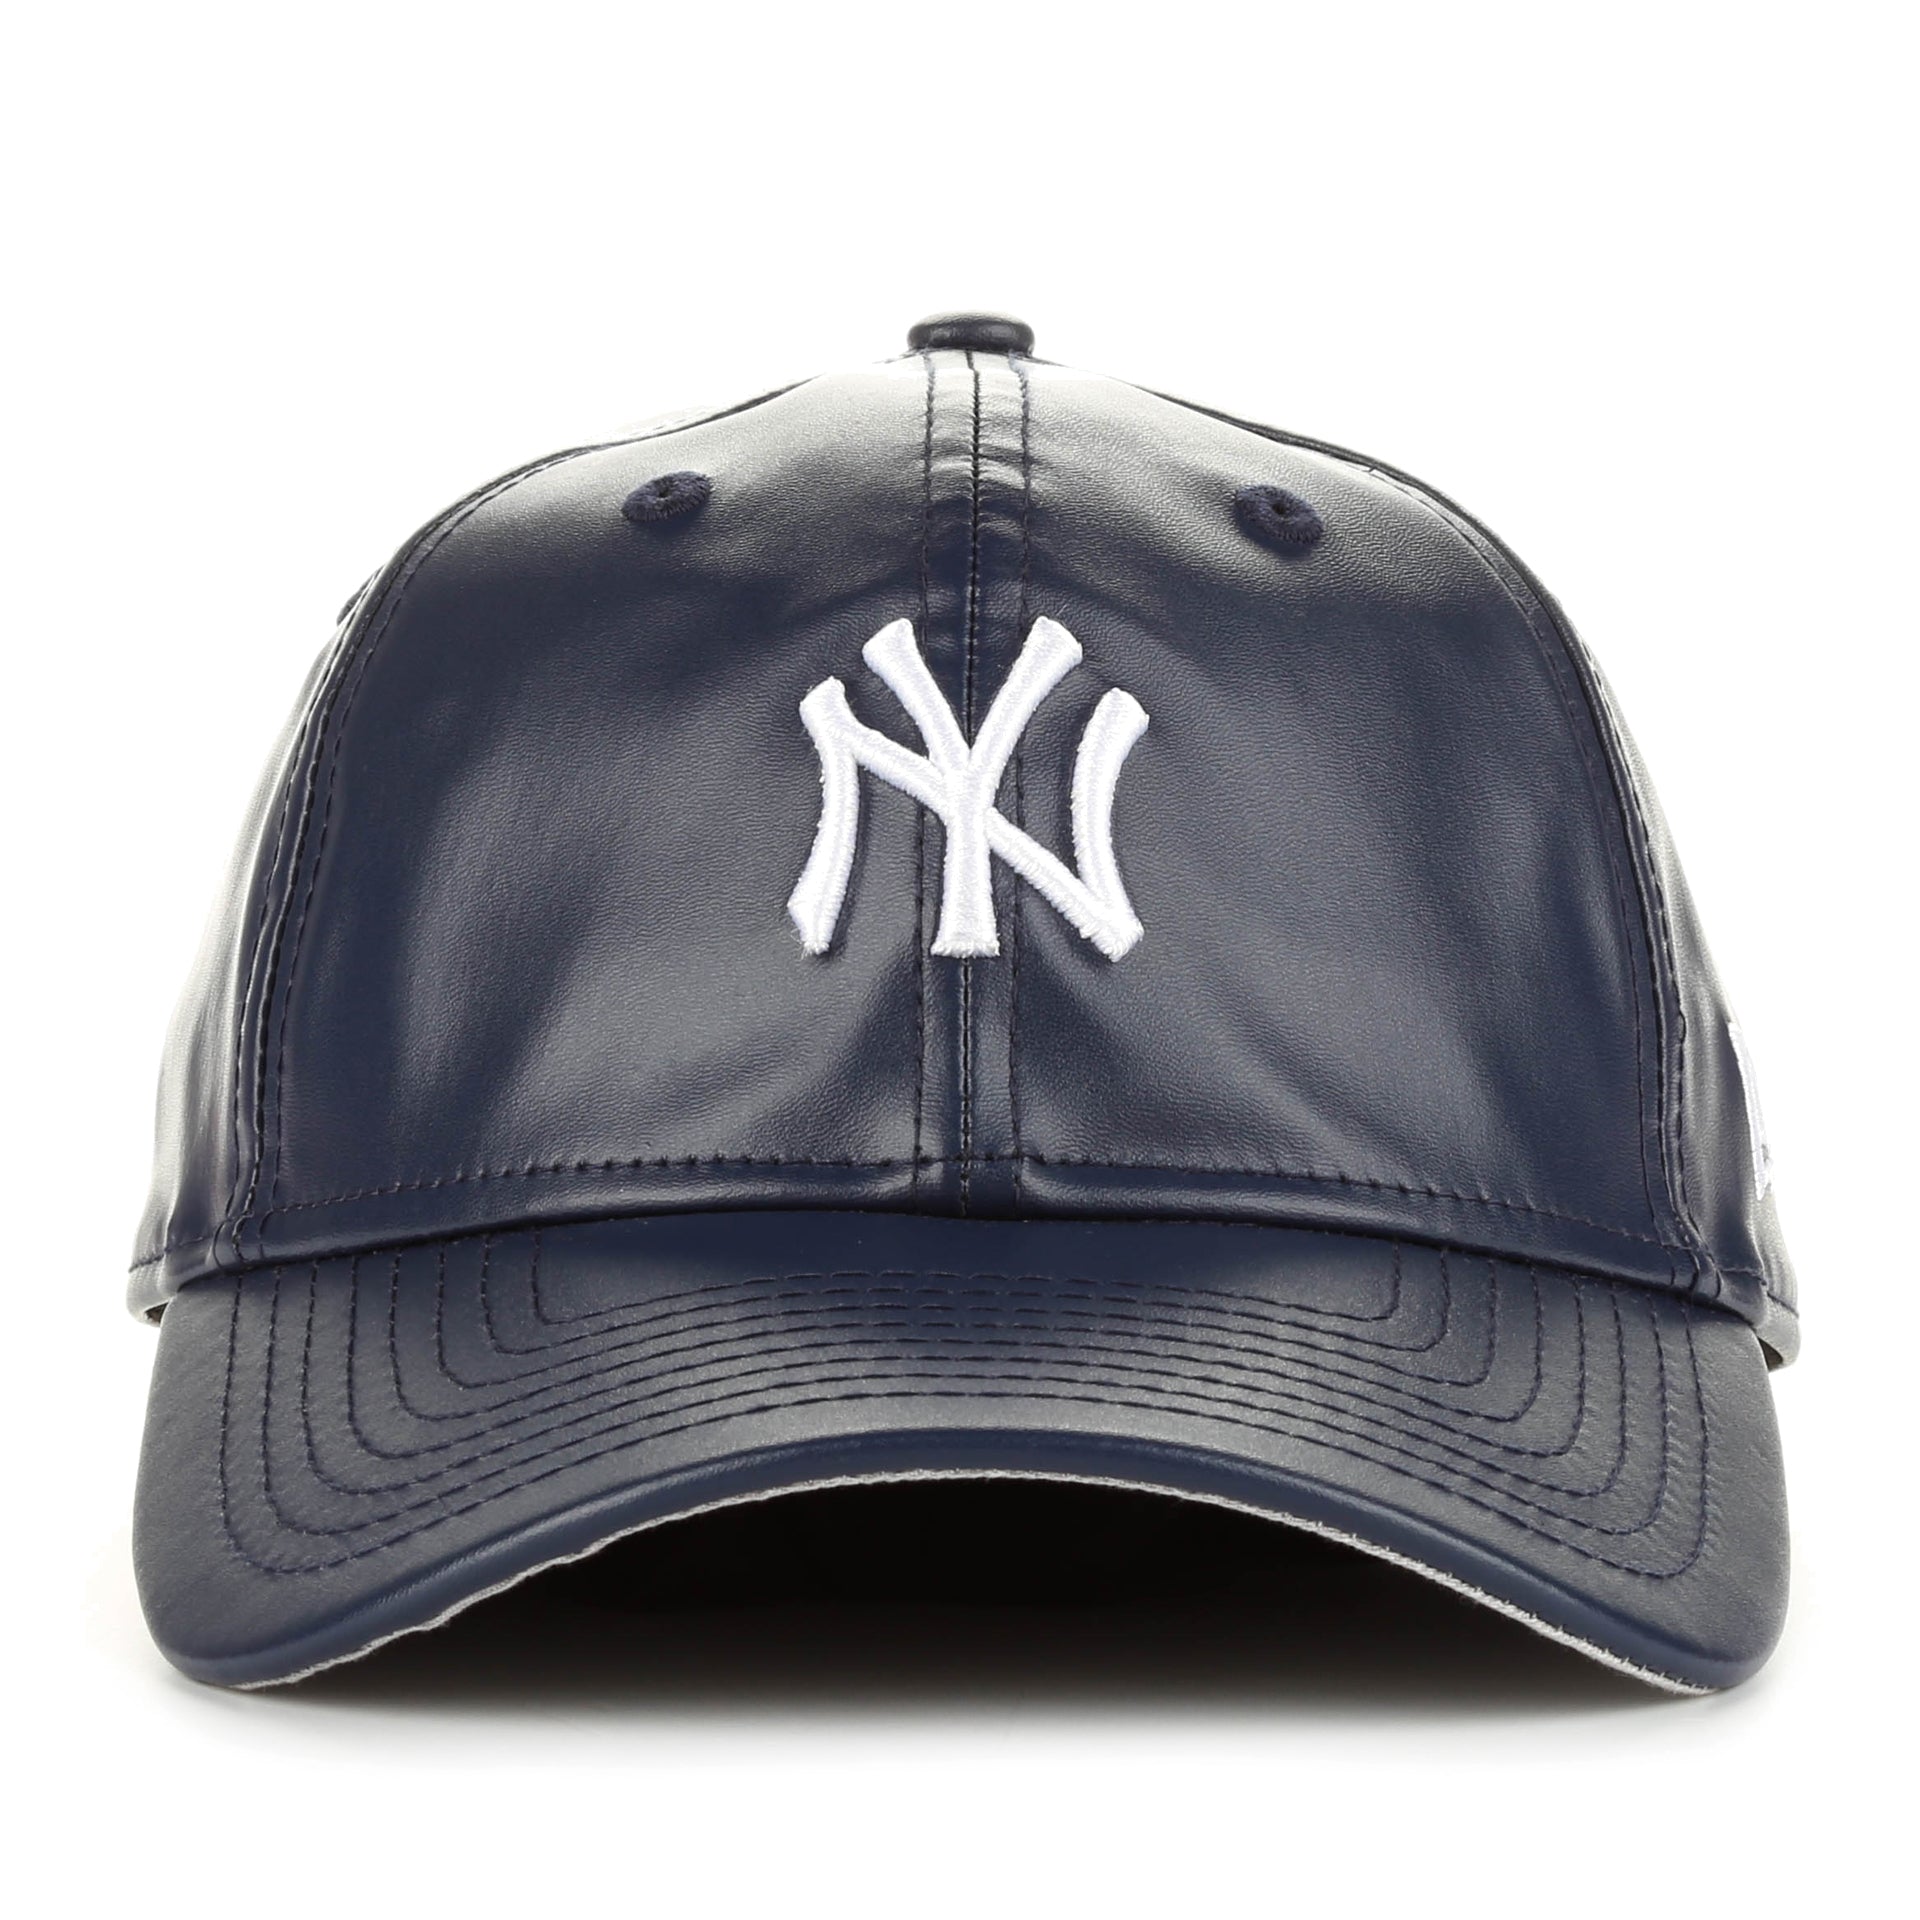 New Era 9Twenty PU Leather Squad Cap - New York Yankees/Black - New Star